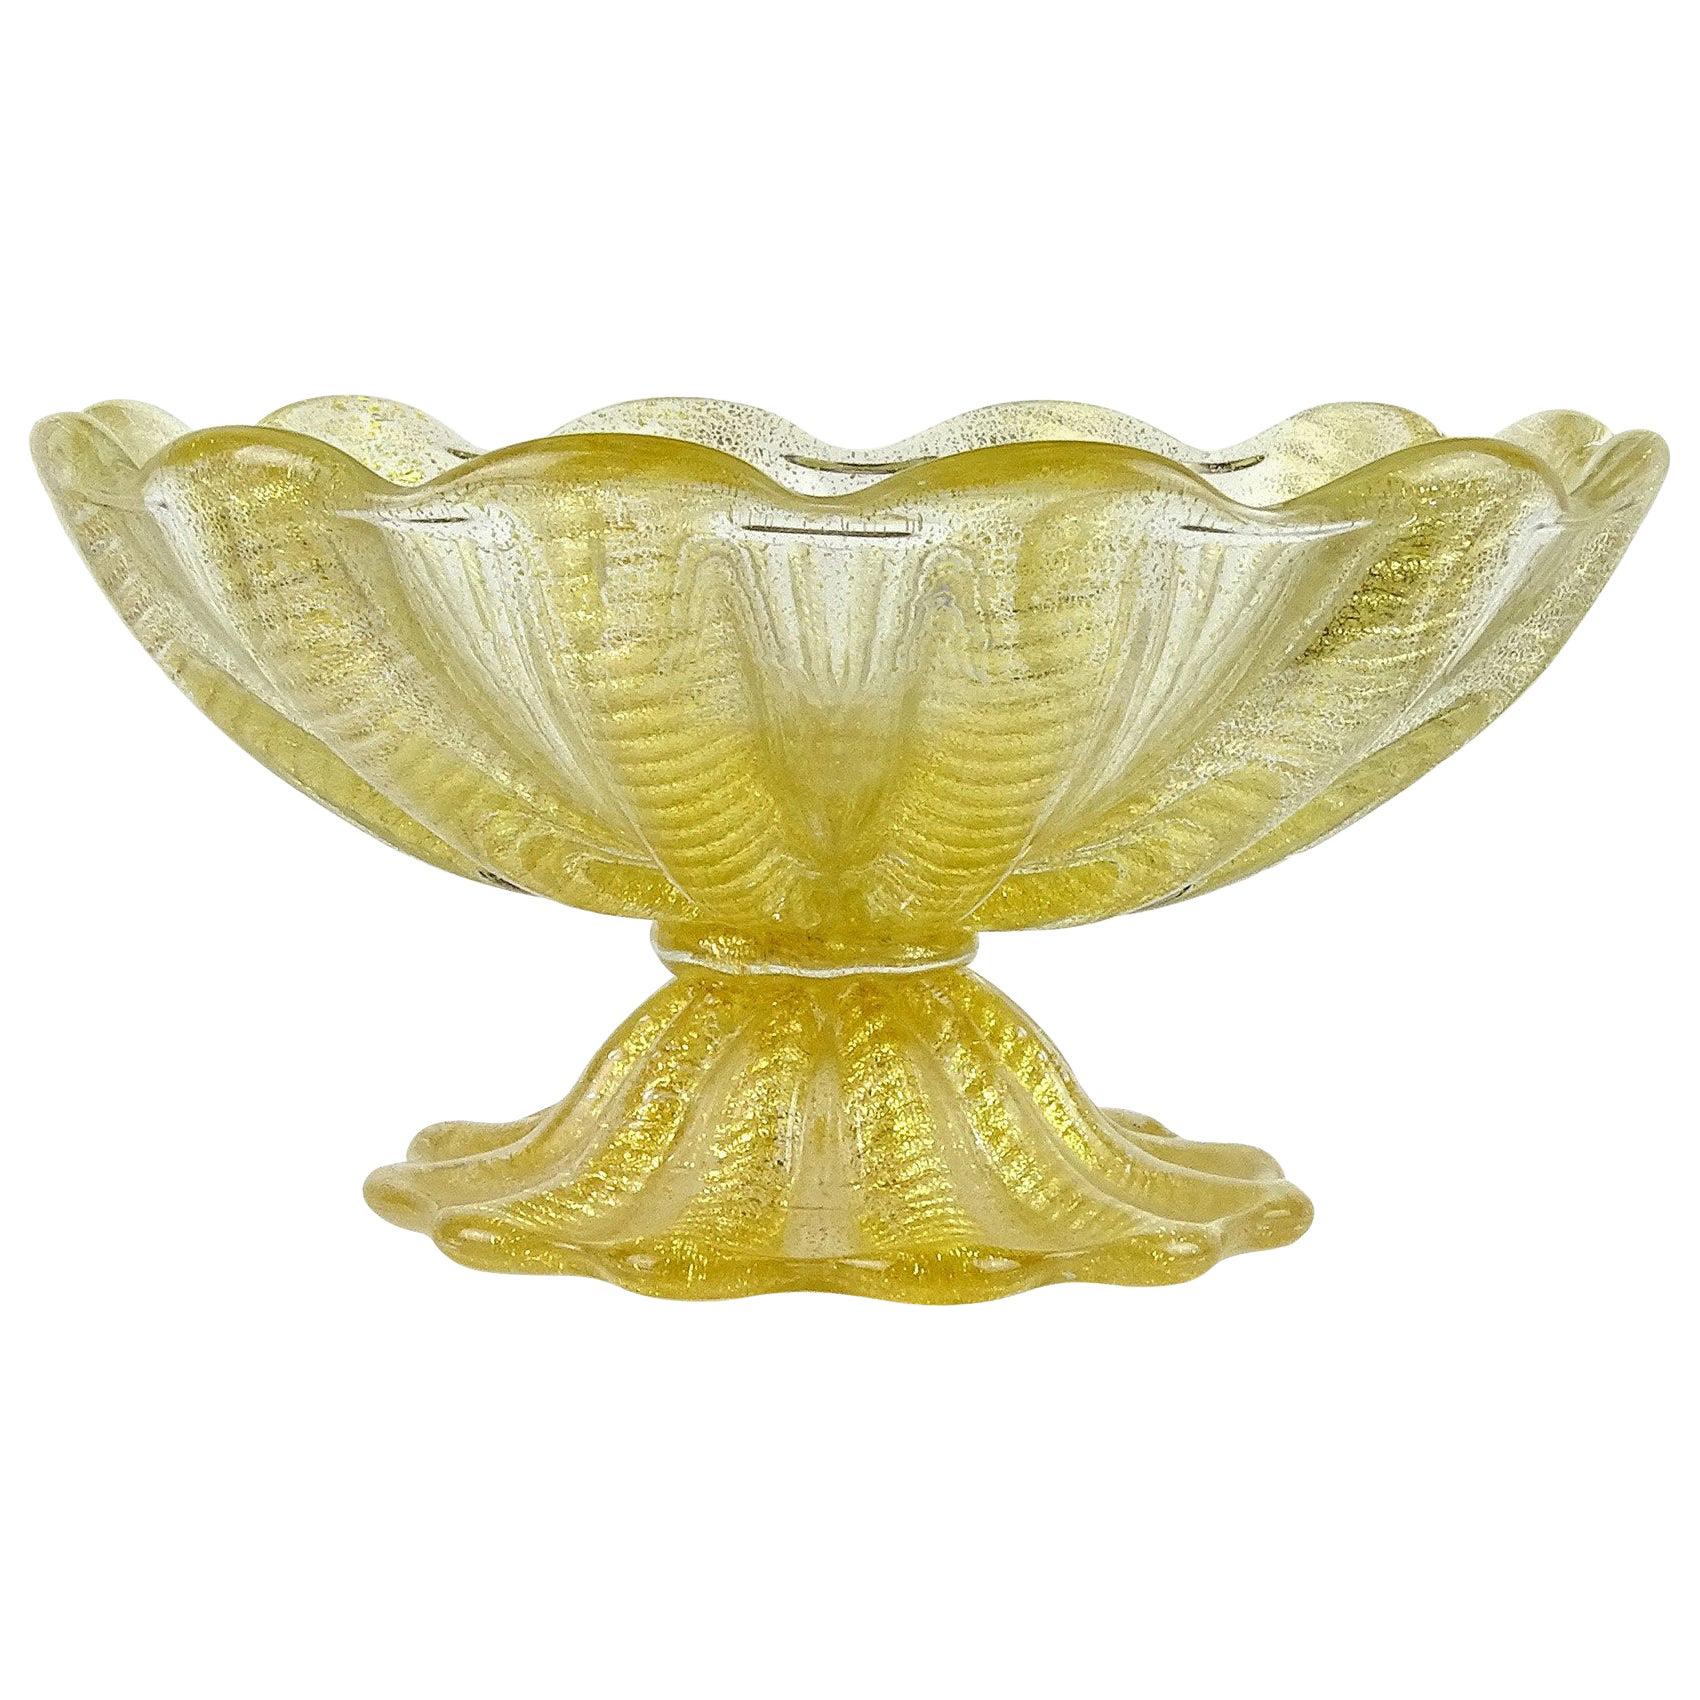 Ercole Barovier Toso Murano Gold Flecks Italian Art Glass Footed Compote Bowl